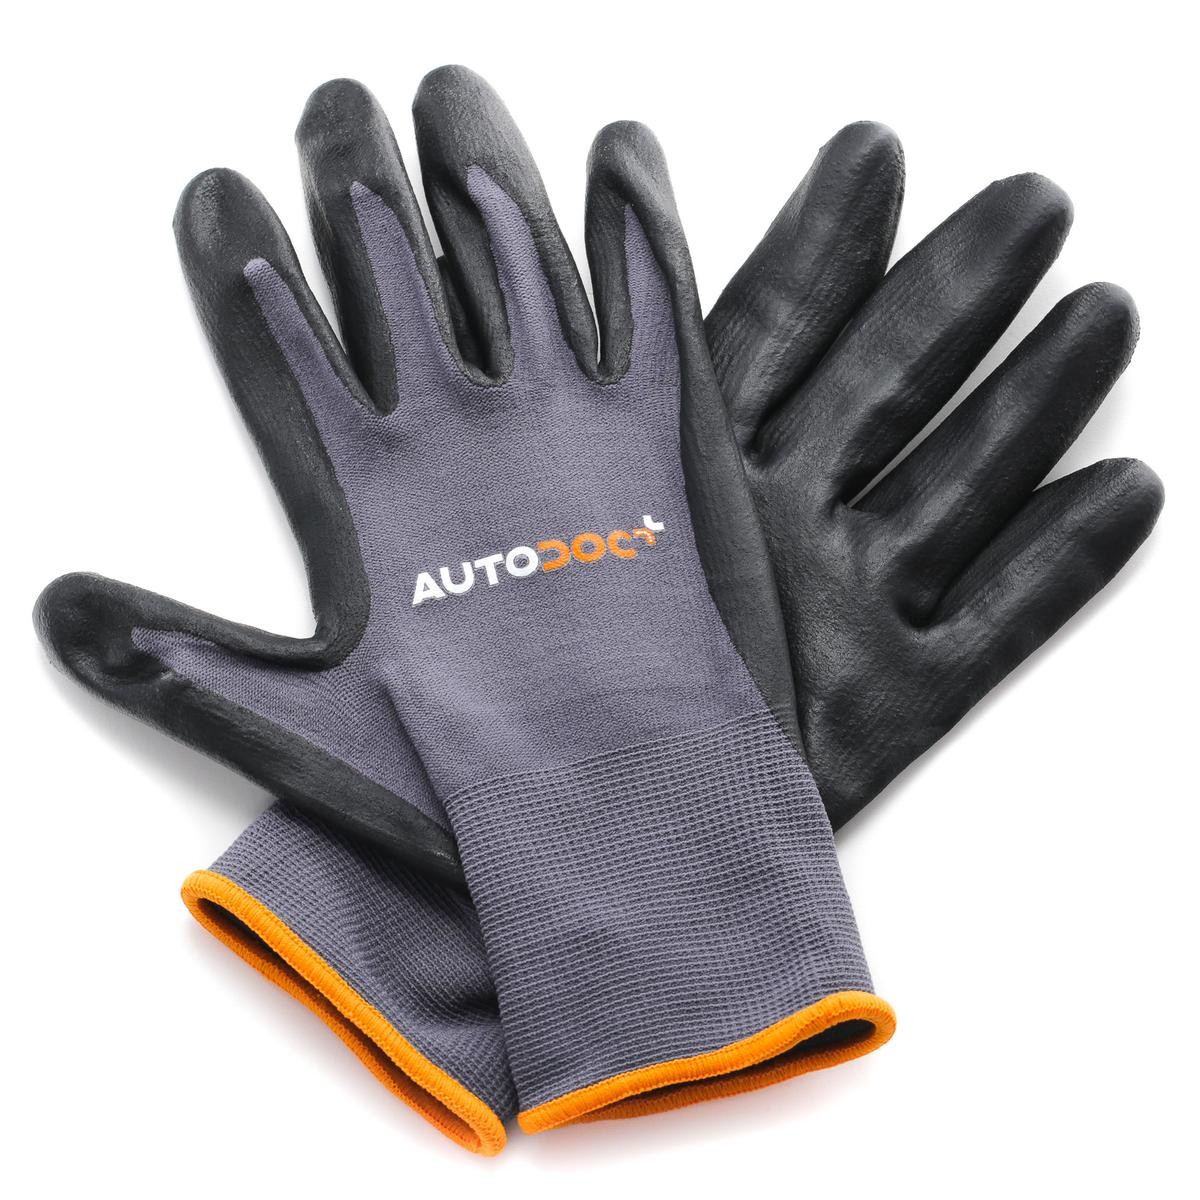 Work gloves ADP-00000001 AUTODOC PRO ADP-00000001 original quality